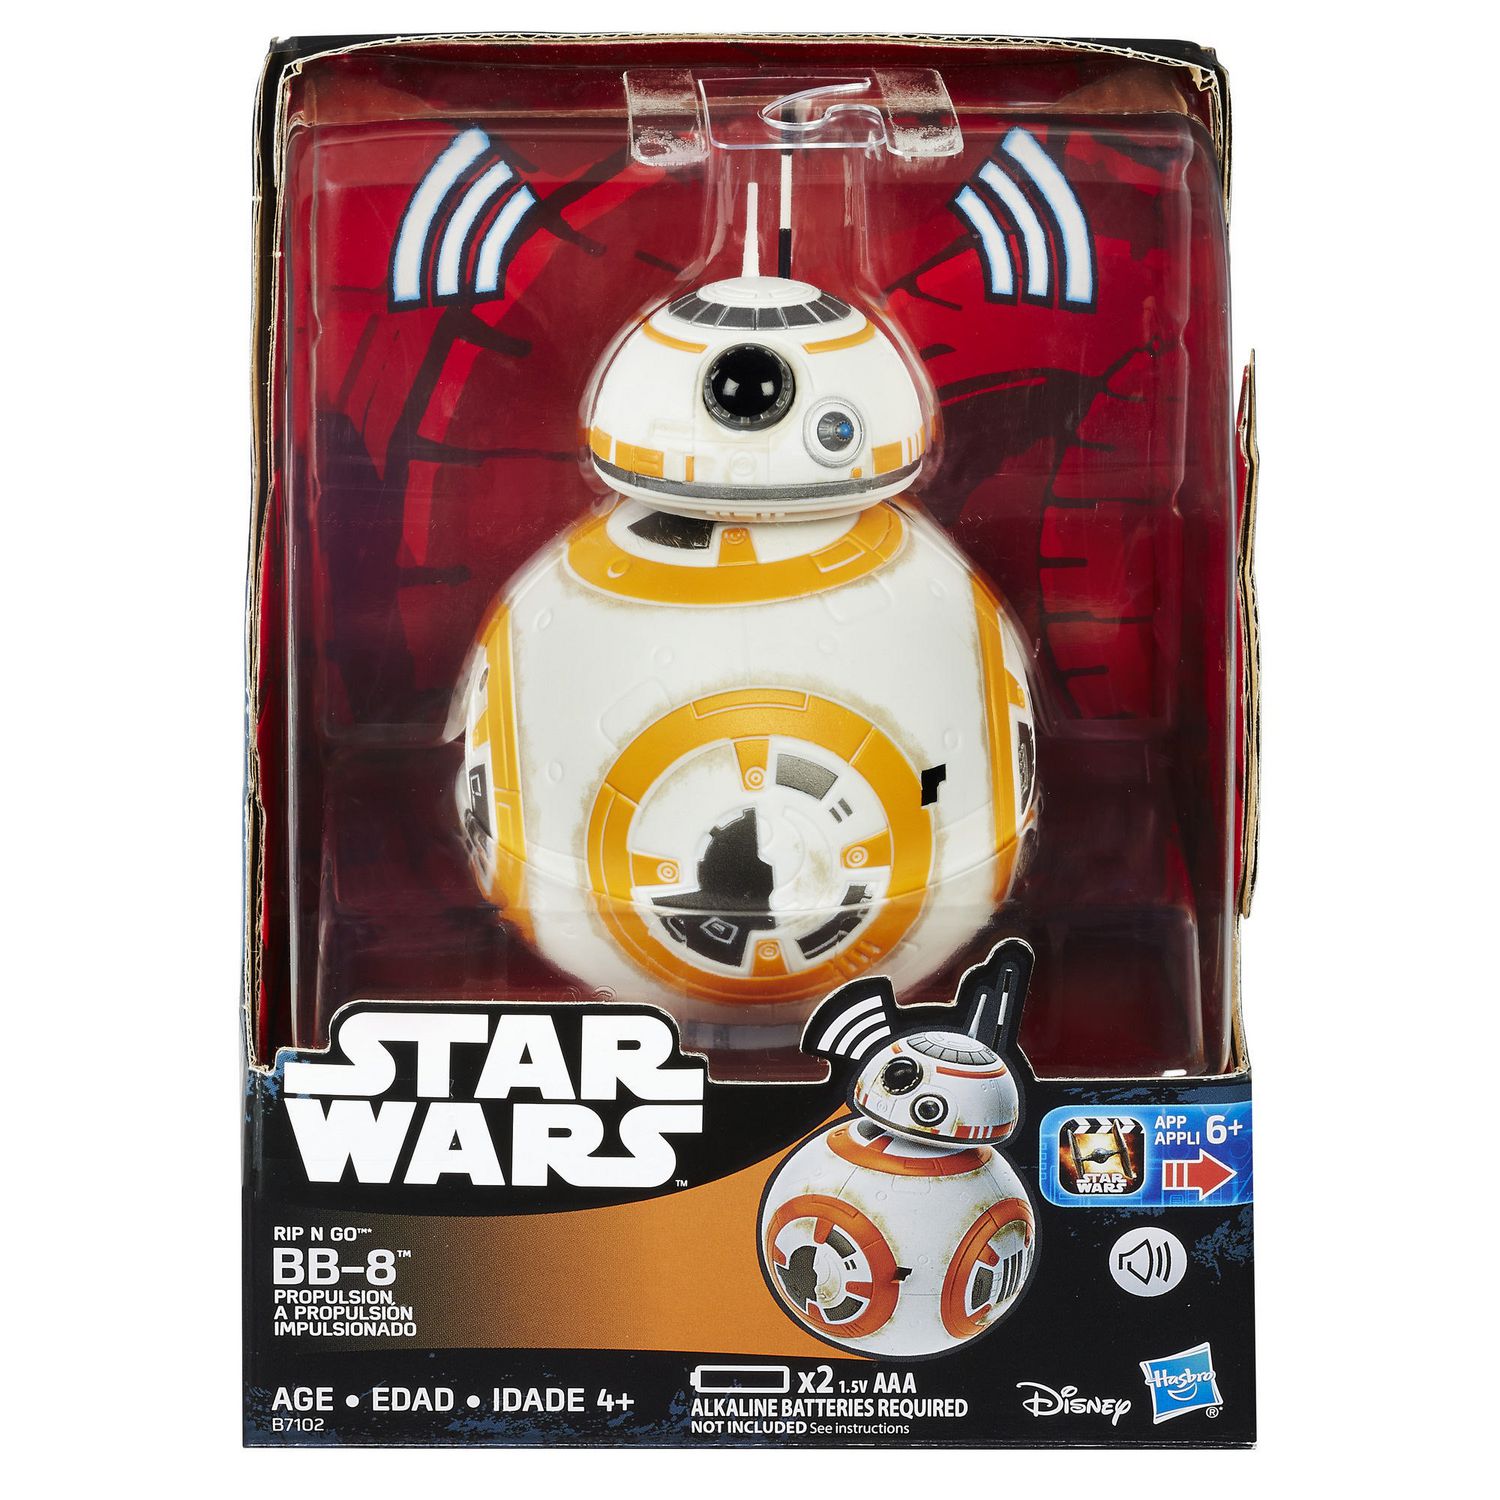 Star Wars Rip N Go BB8 Action Figure Toy Kids Droid Vehicle Hasbro Disney NEW 